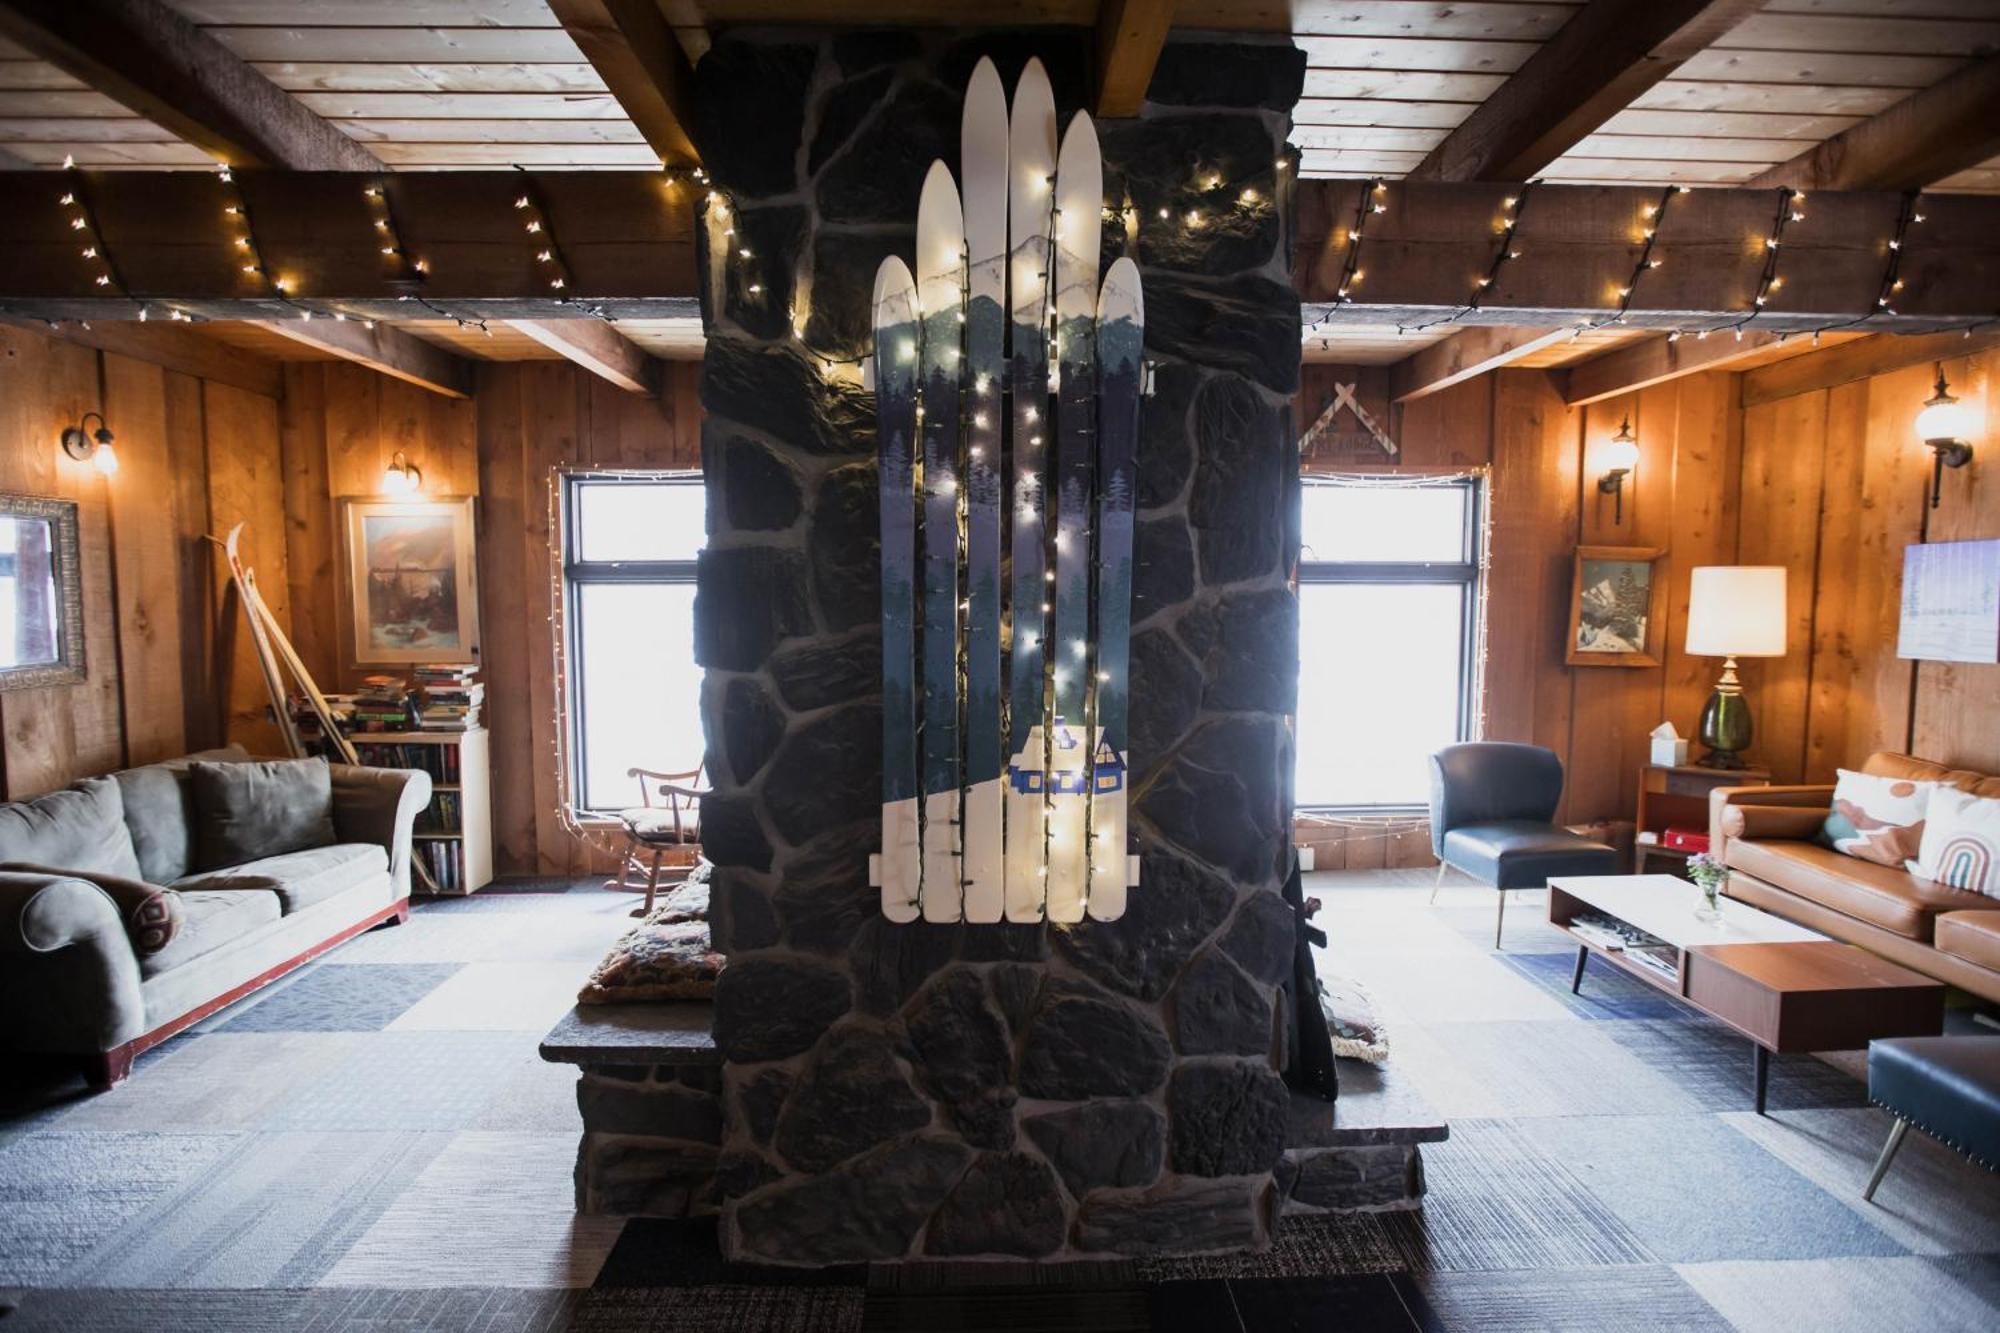 The Viking Lodge - Downtown Winter Park Colorado Exterior foto